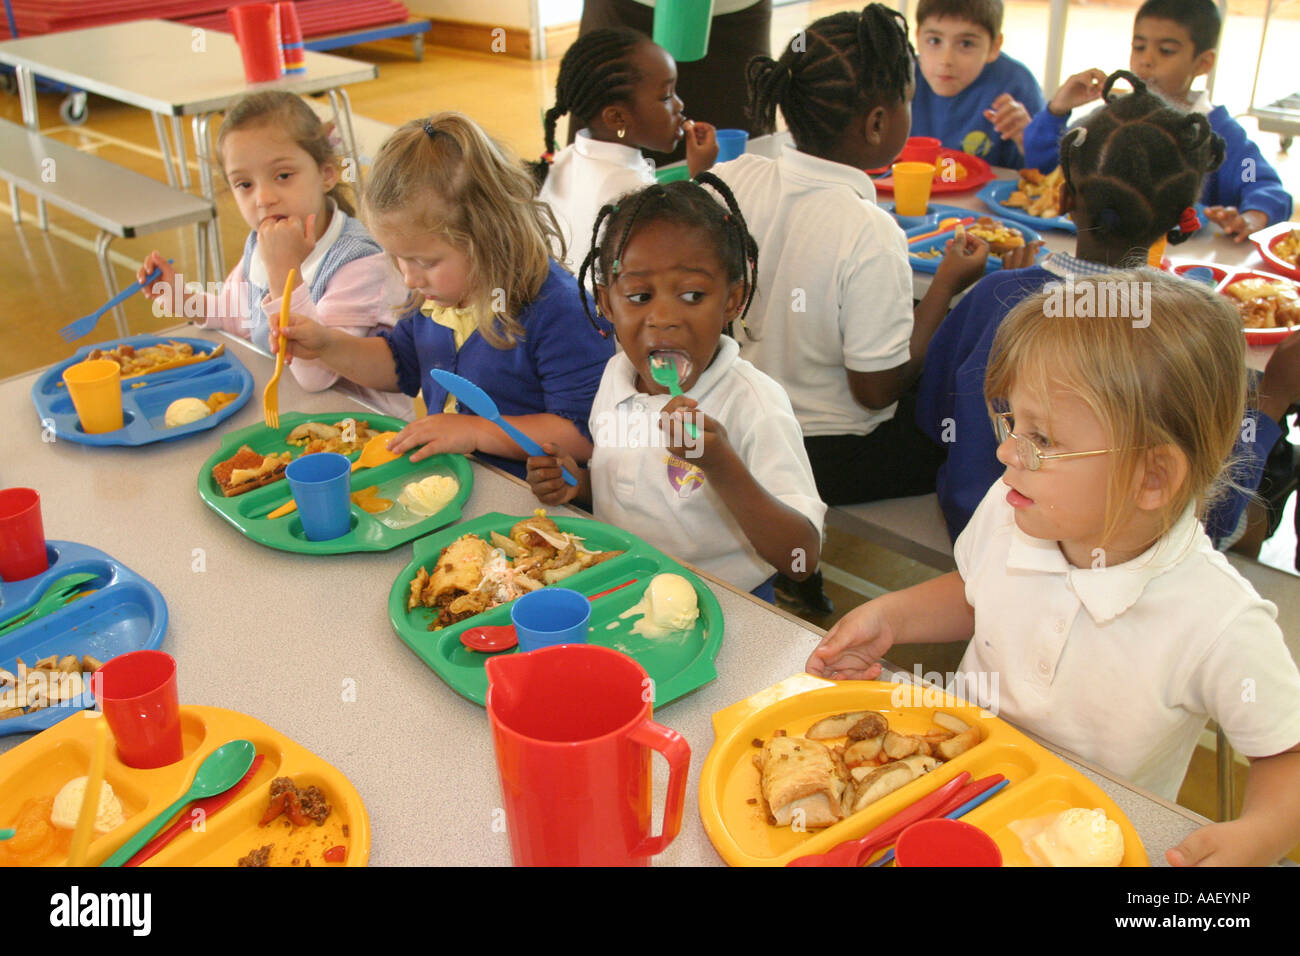 https://c8.alamy.com/comp/AAEYNP/primary-school-canteen-with-children-eating-lunch-AAEYNP.jpg